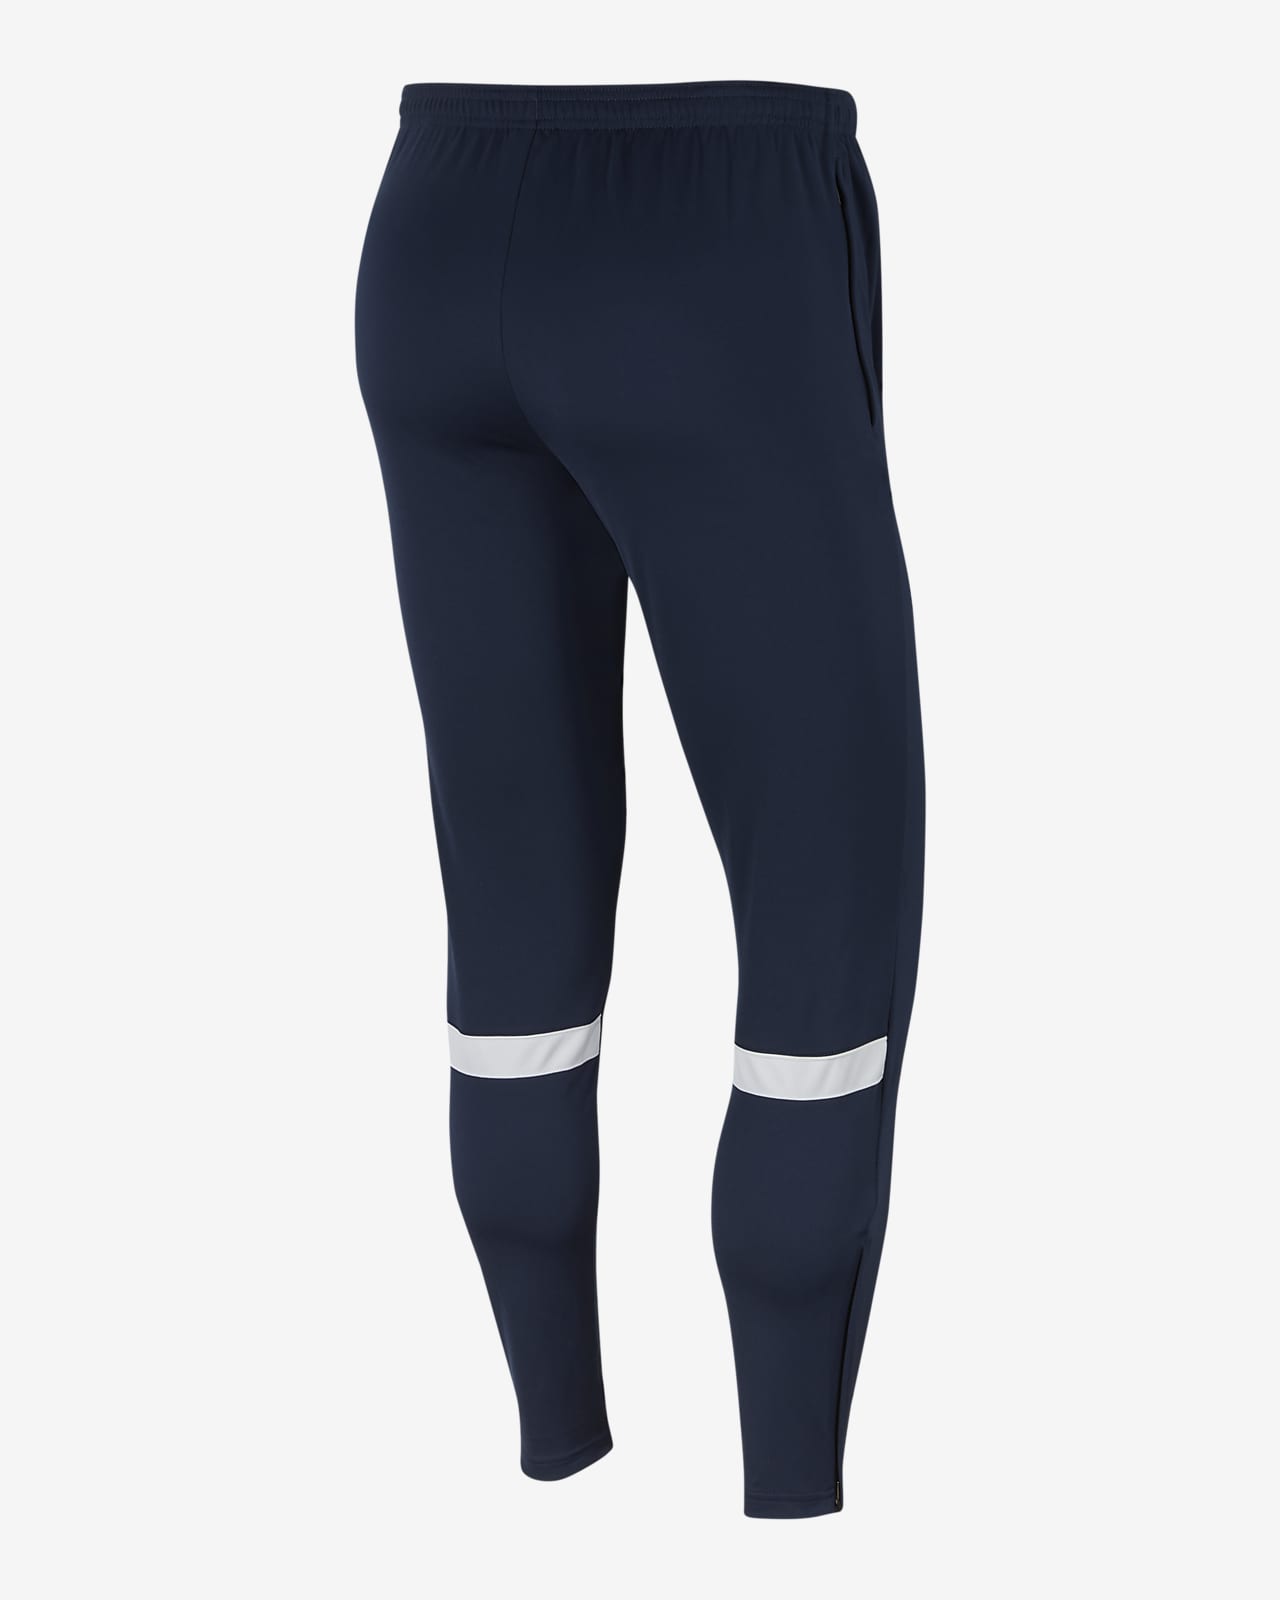 Nike Dri-FIT Academy Football Pants.